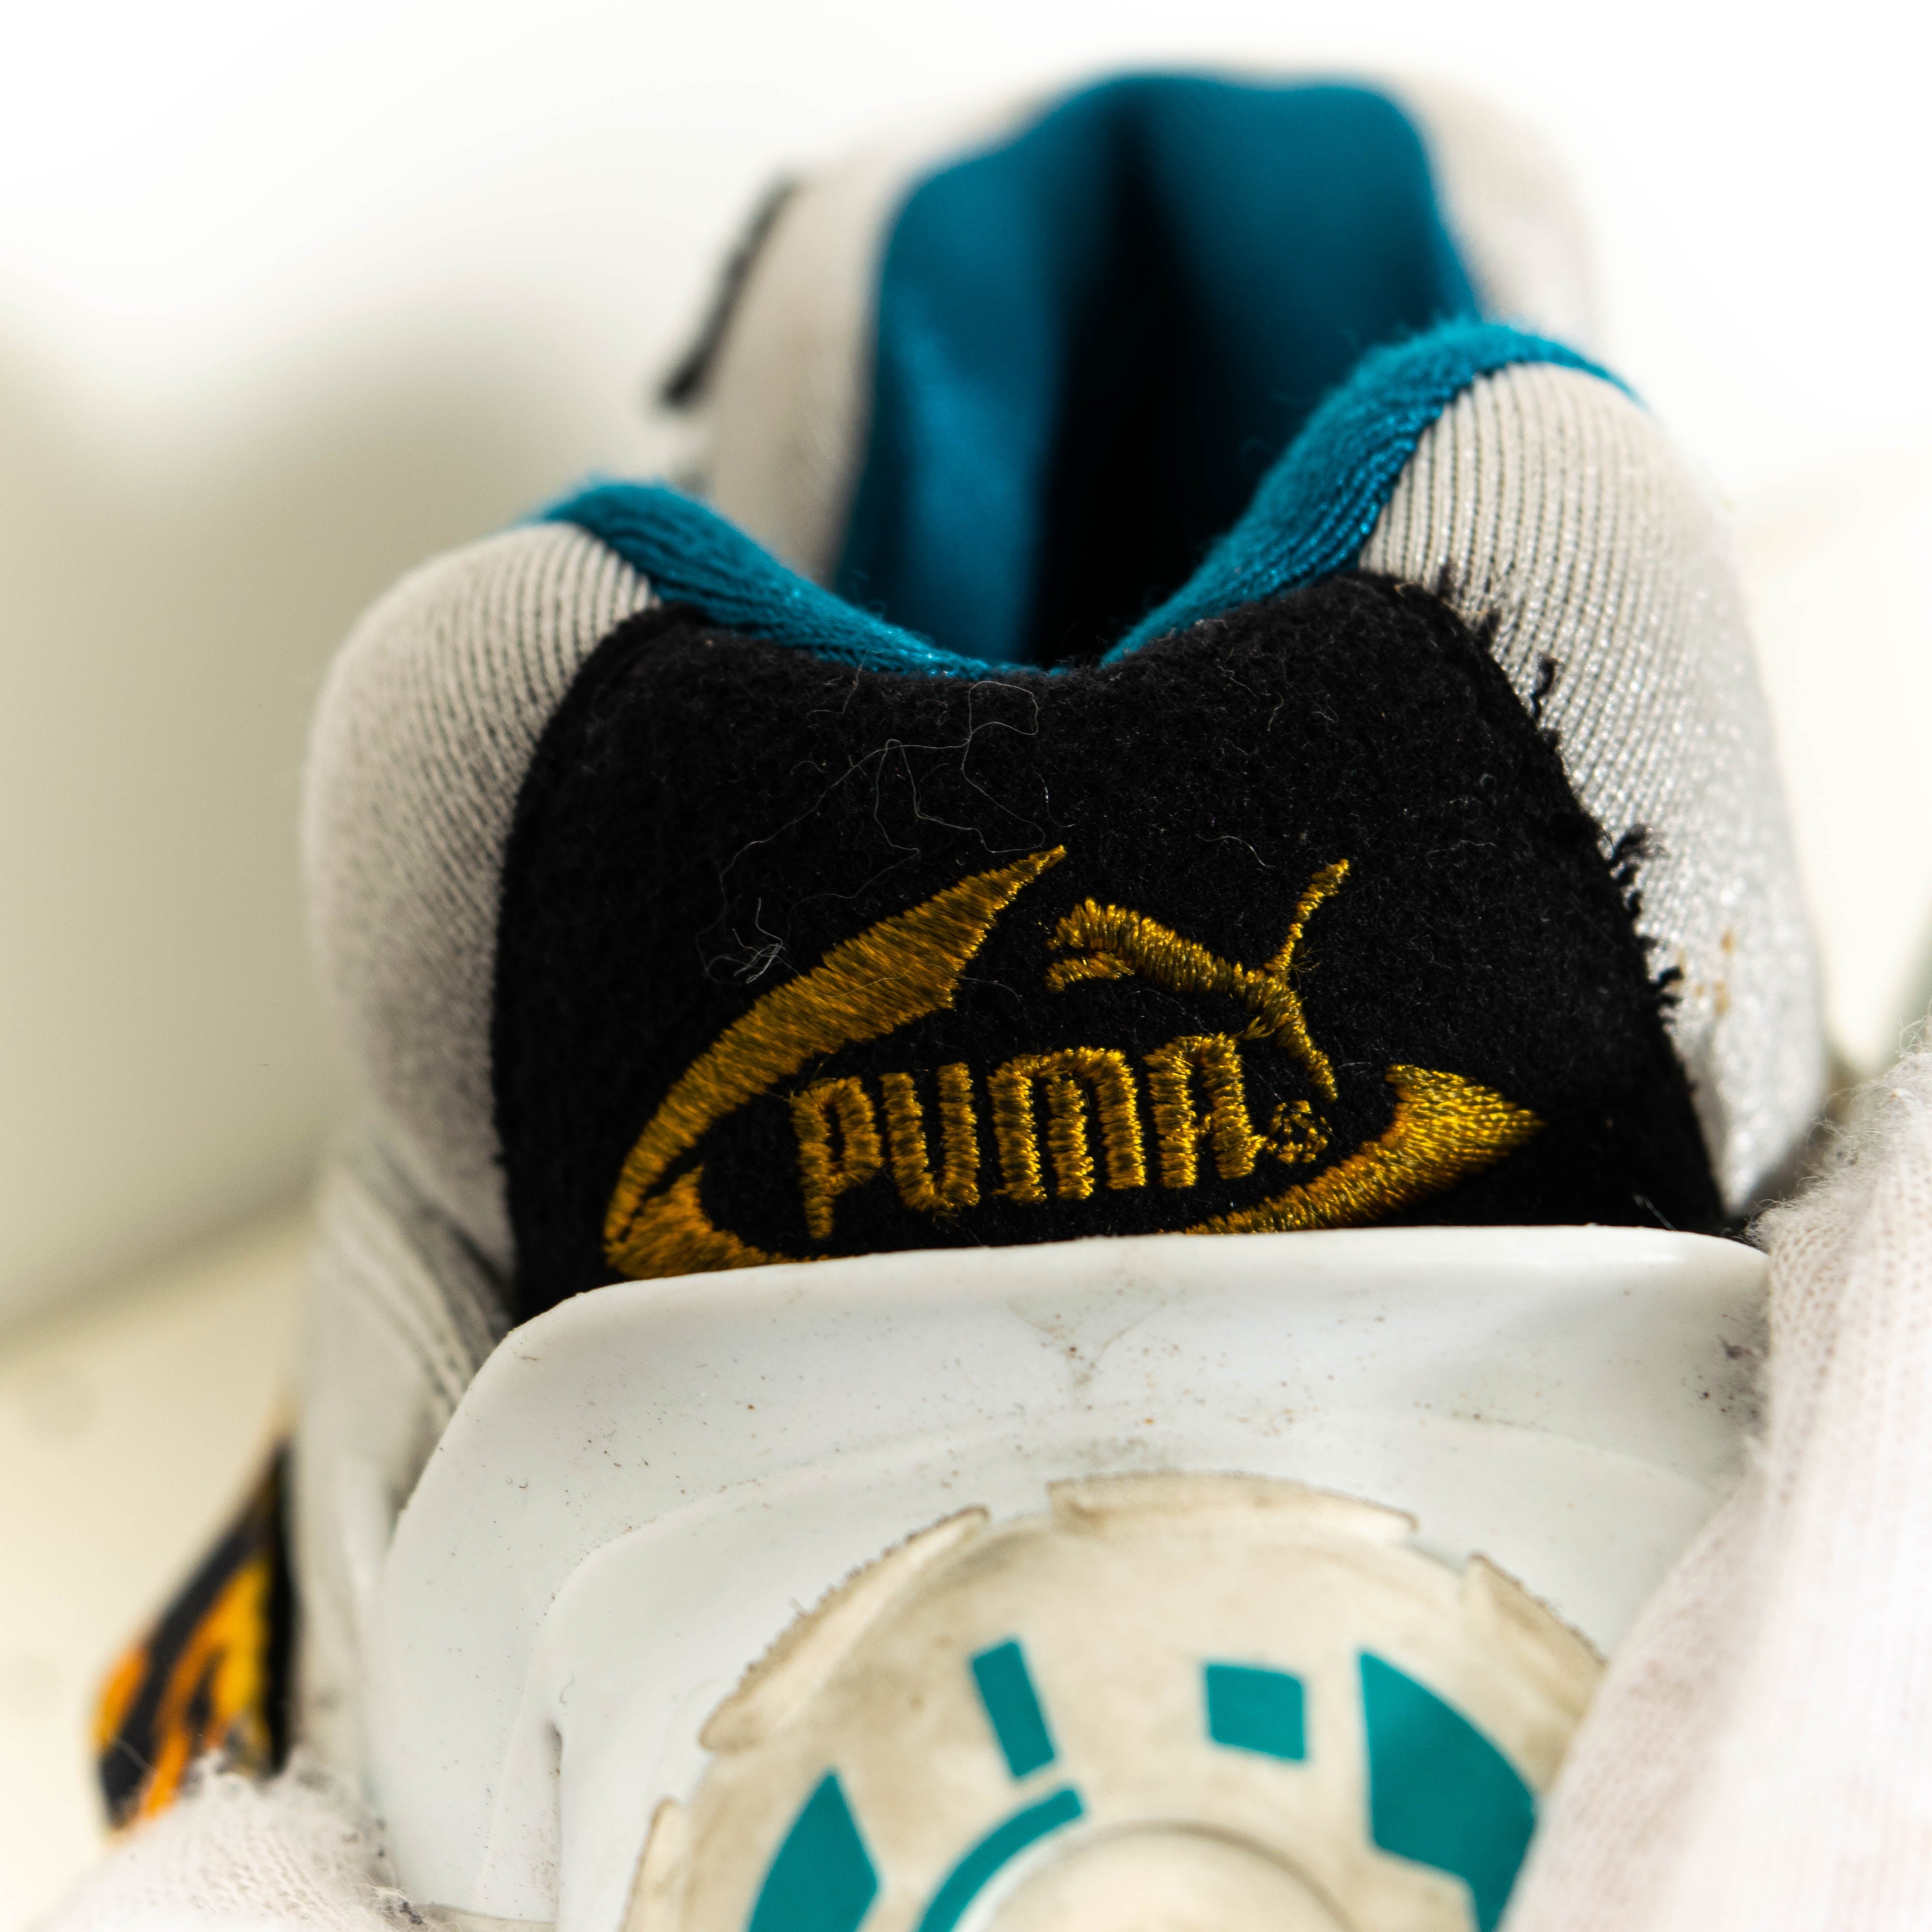 Vintage Puma Disc Trinomic 1995 White Low Top Sneakers Mens EU40 1/3